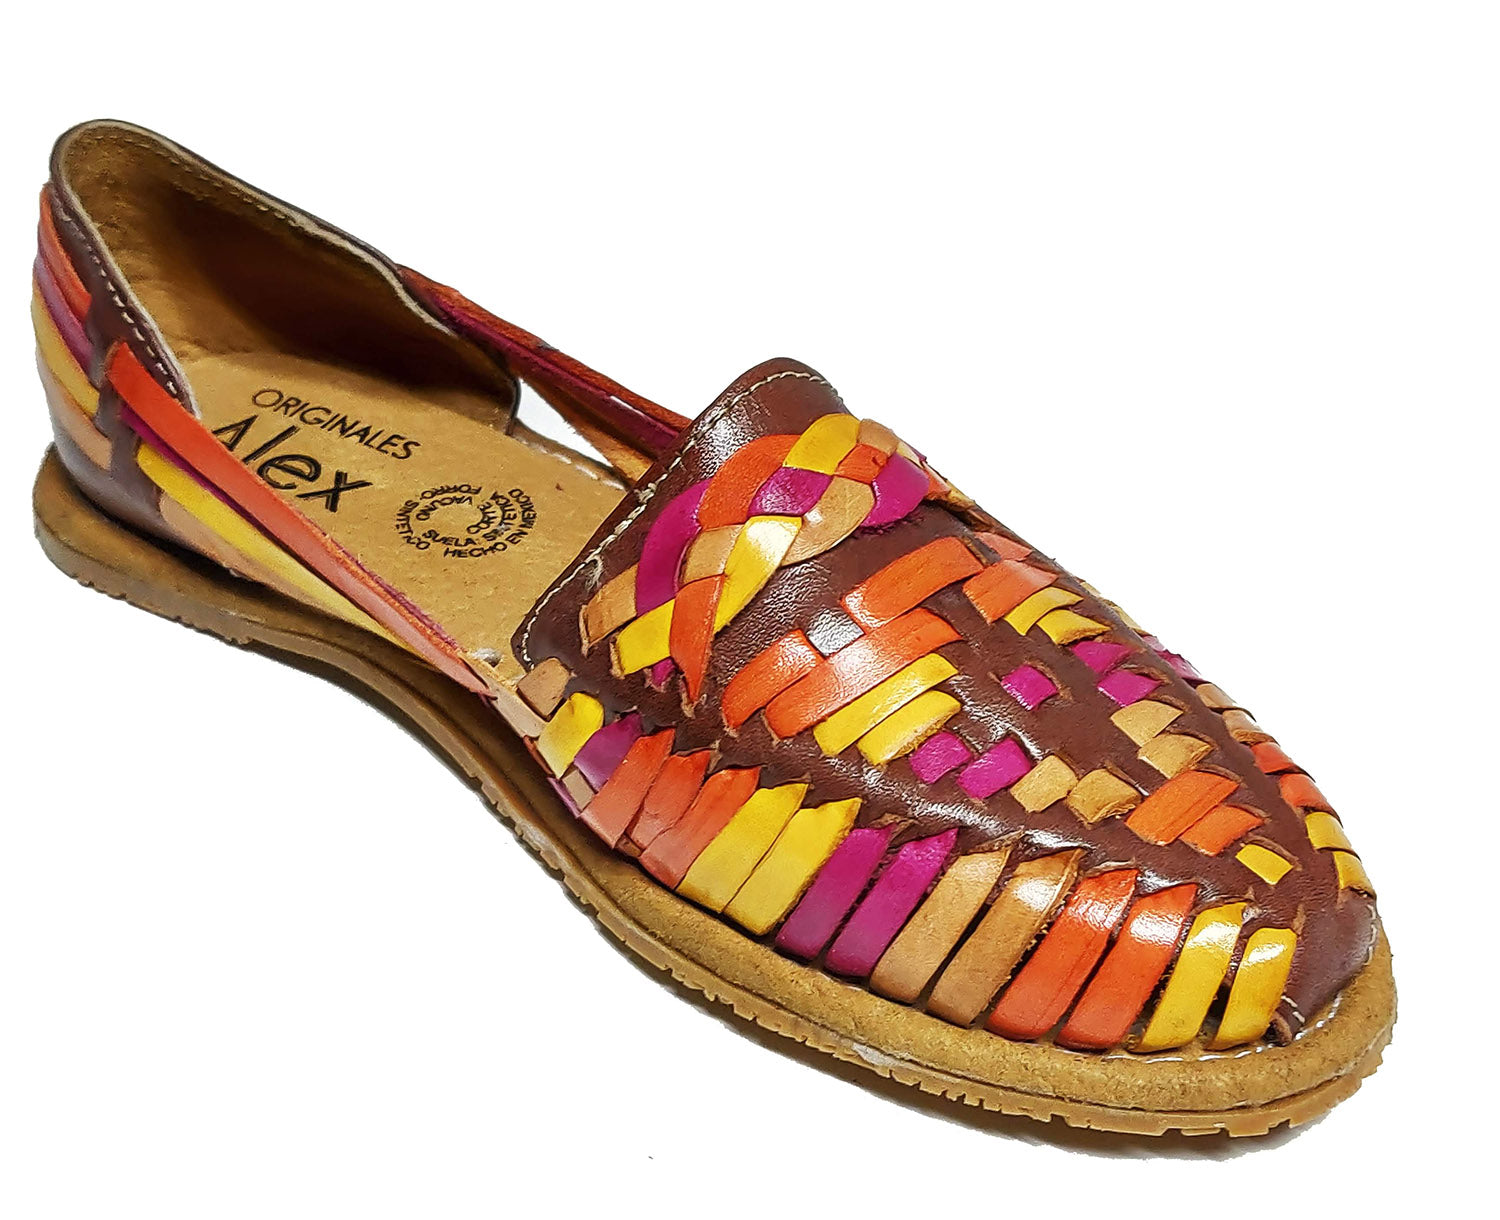 multicolor huarache sandals